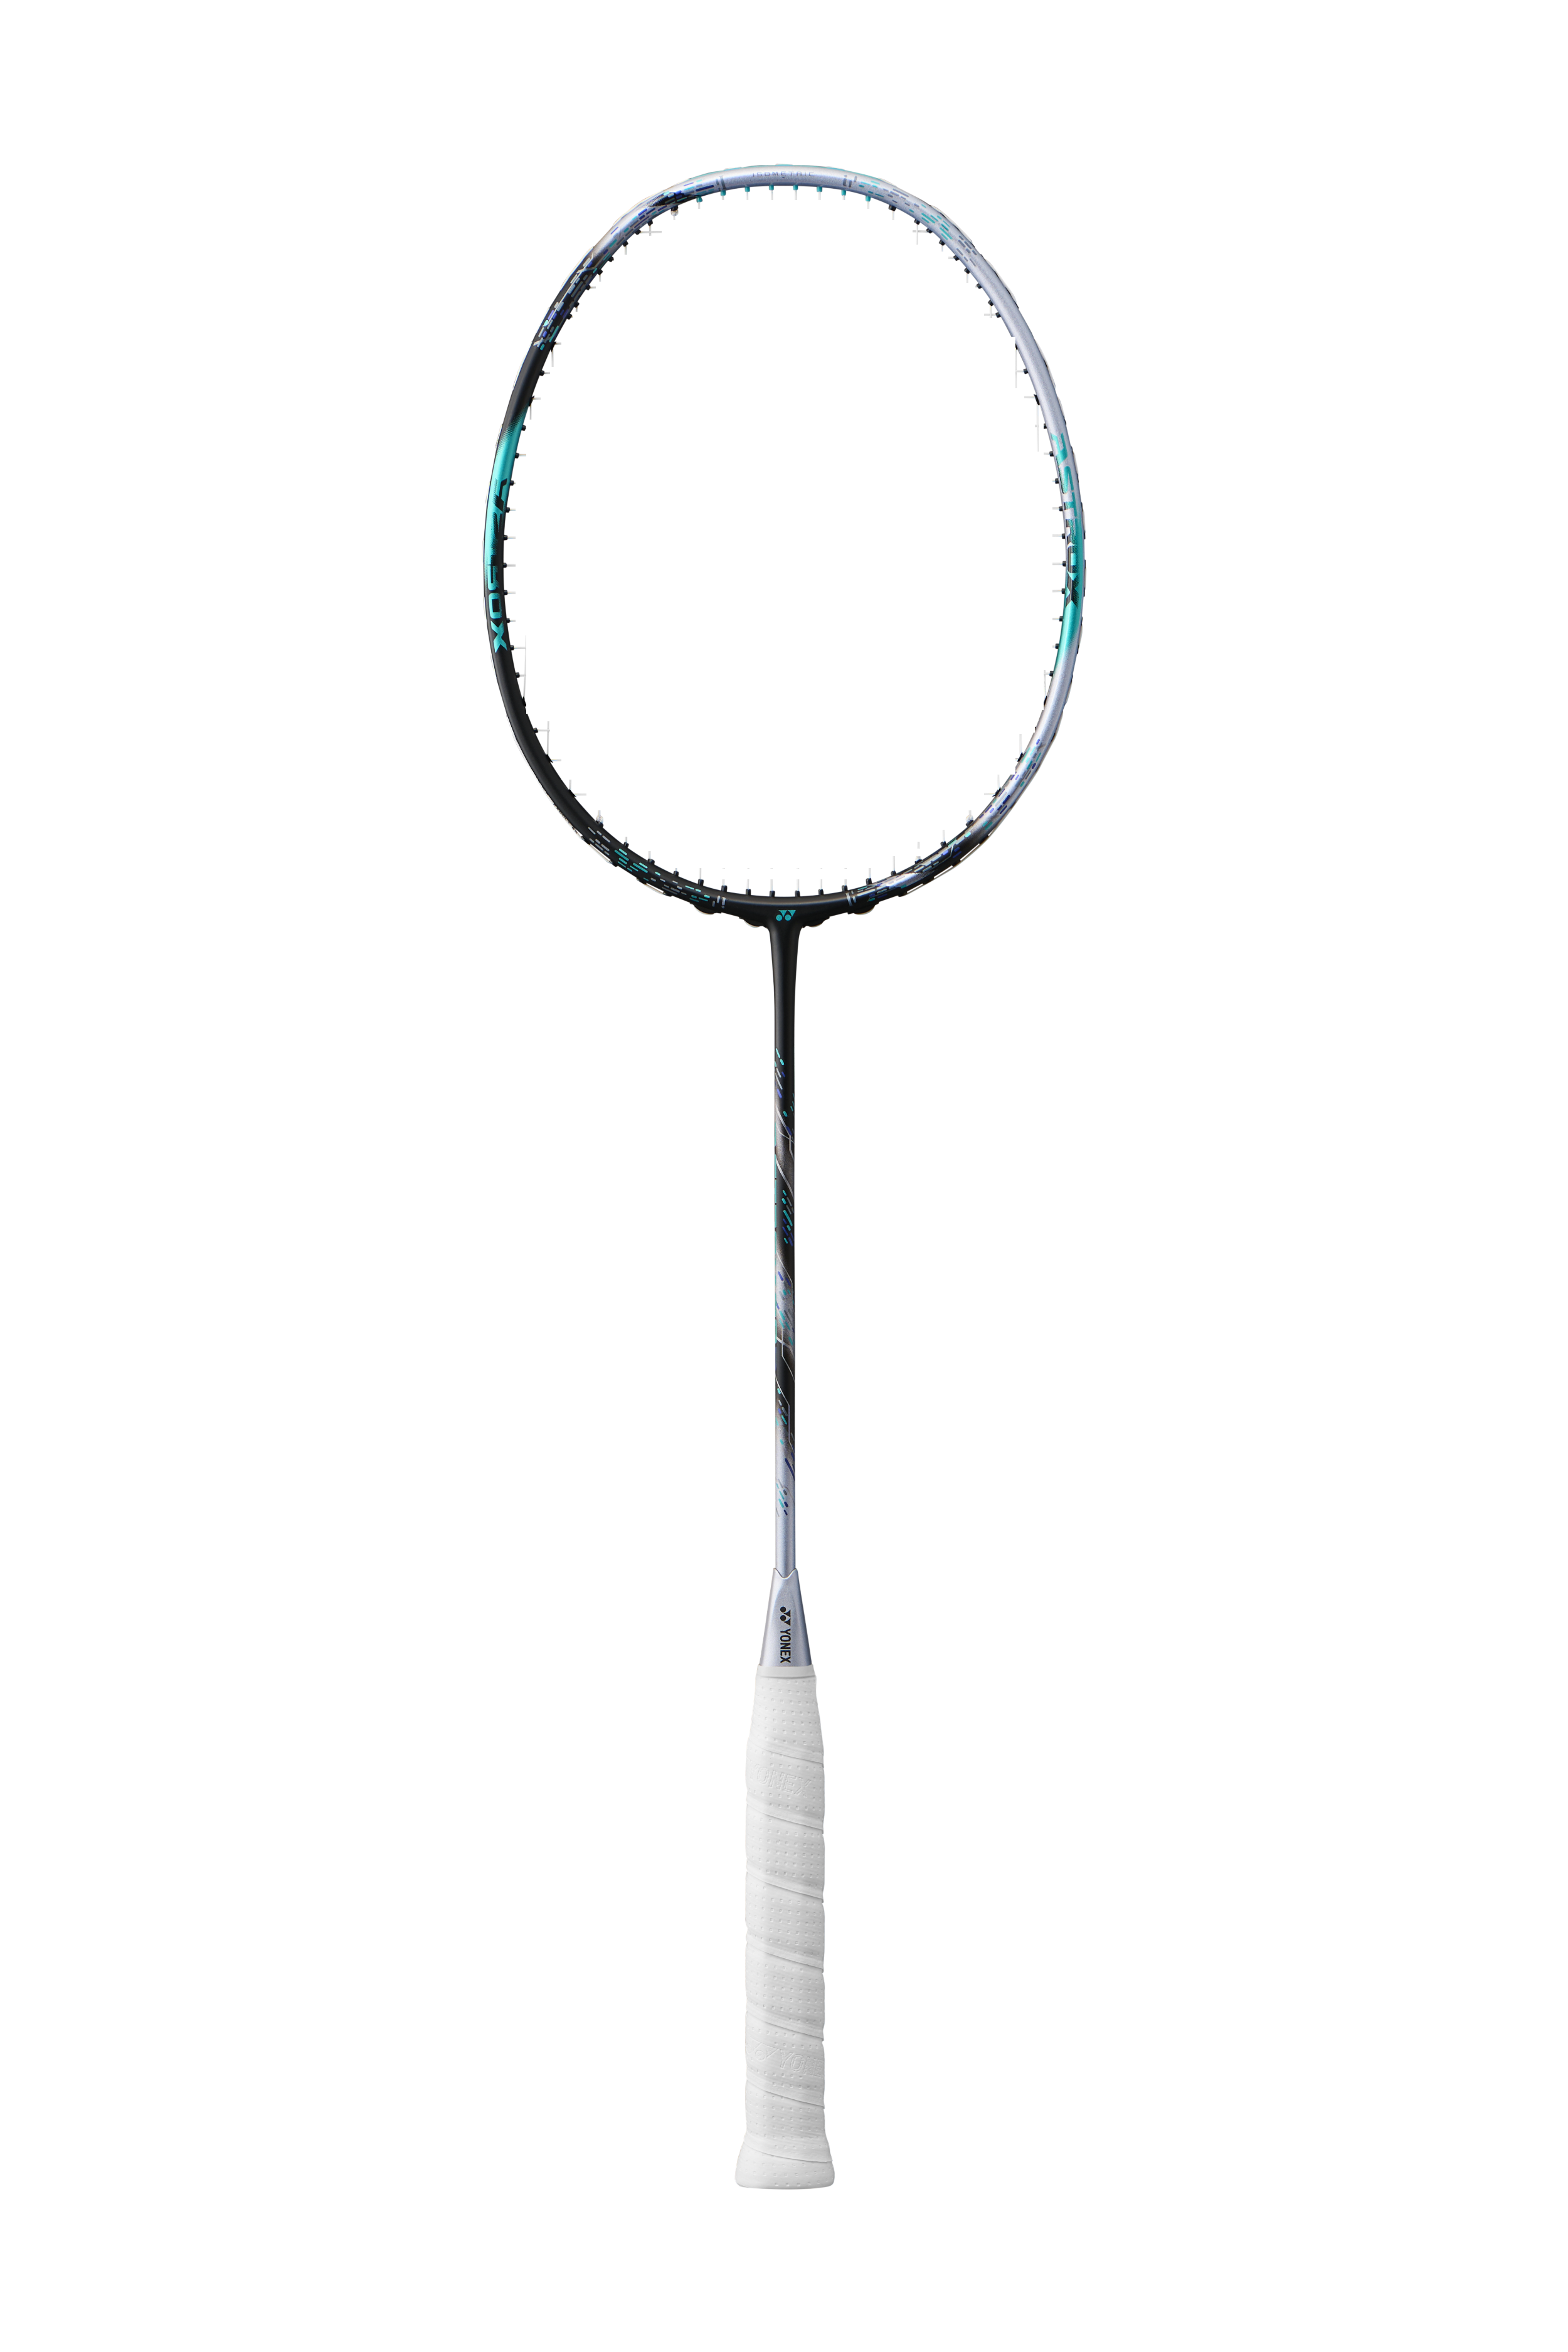 YONEX Badminton Racket - Astrox 88D PRO - Black/Silver - Frame only - Pre-order